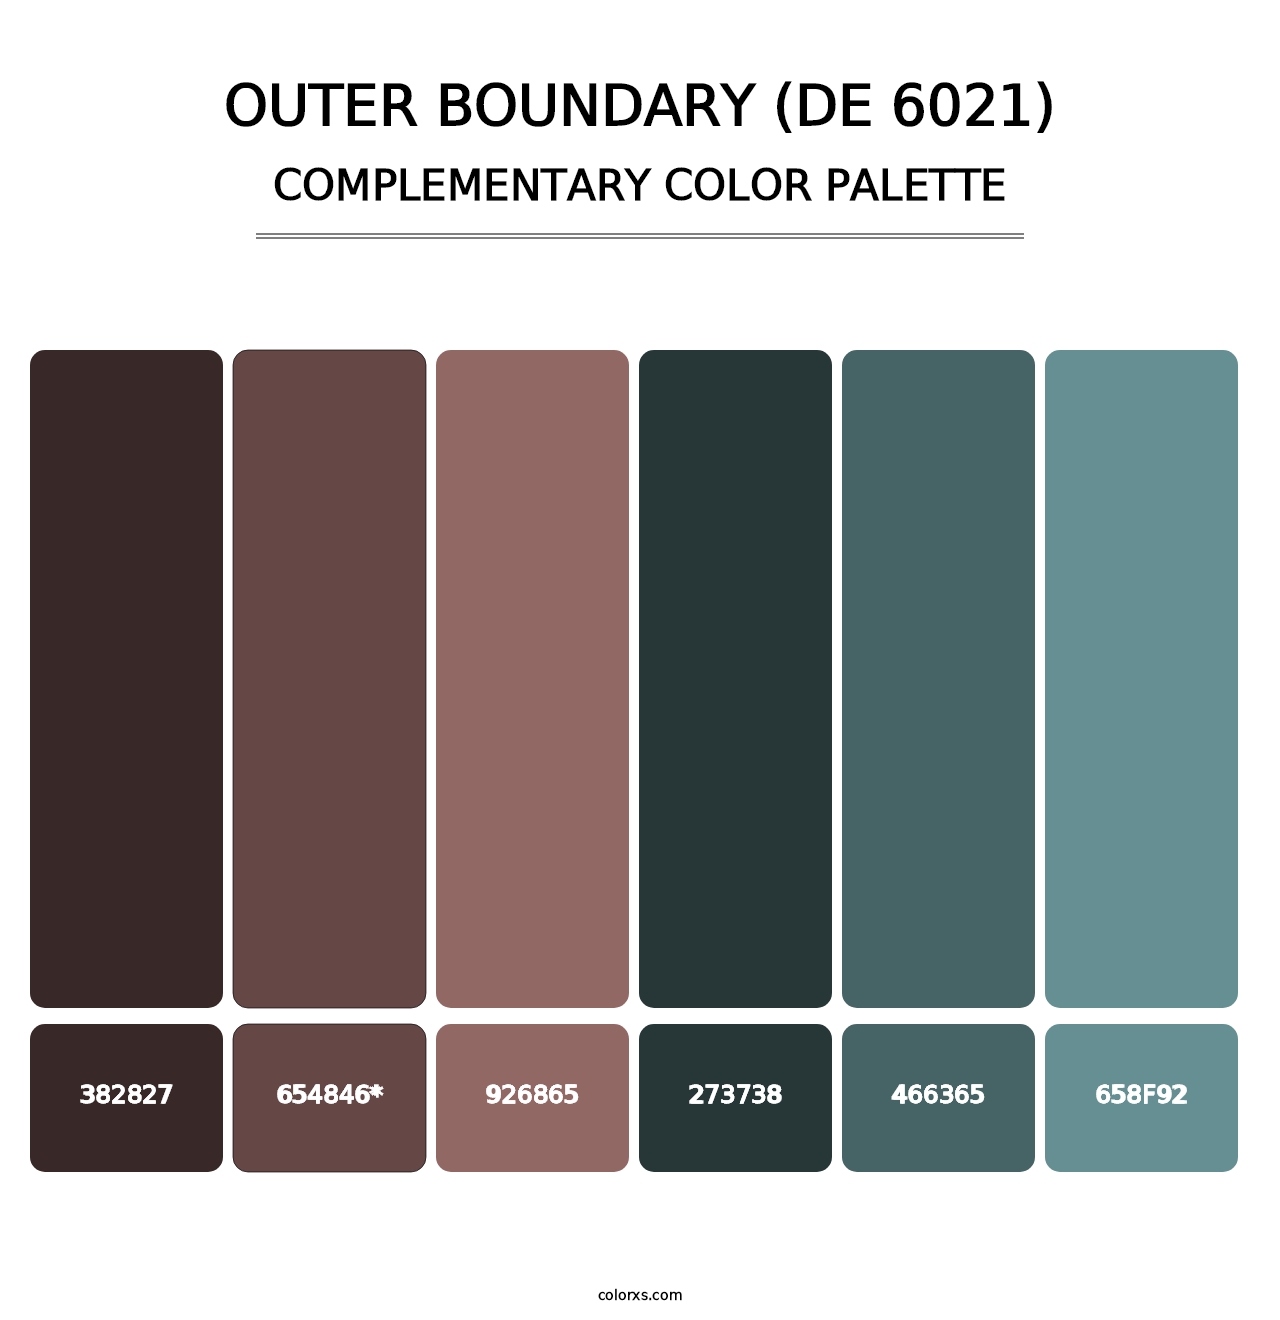 Outer Boundary (DE 6021) - Complementary Color Palette